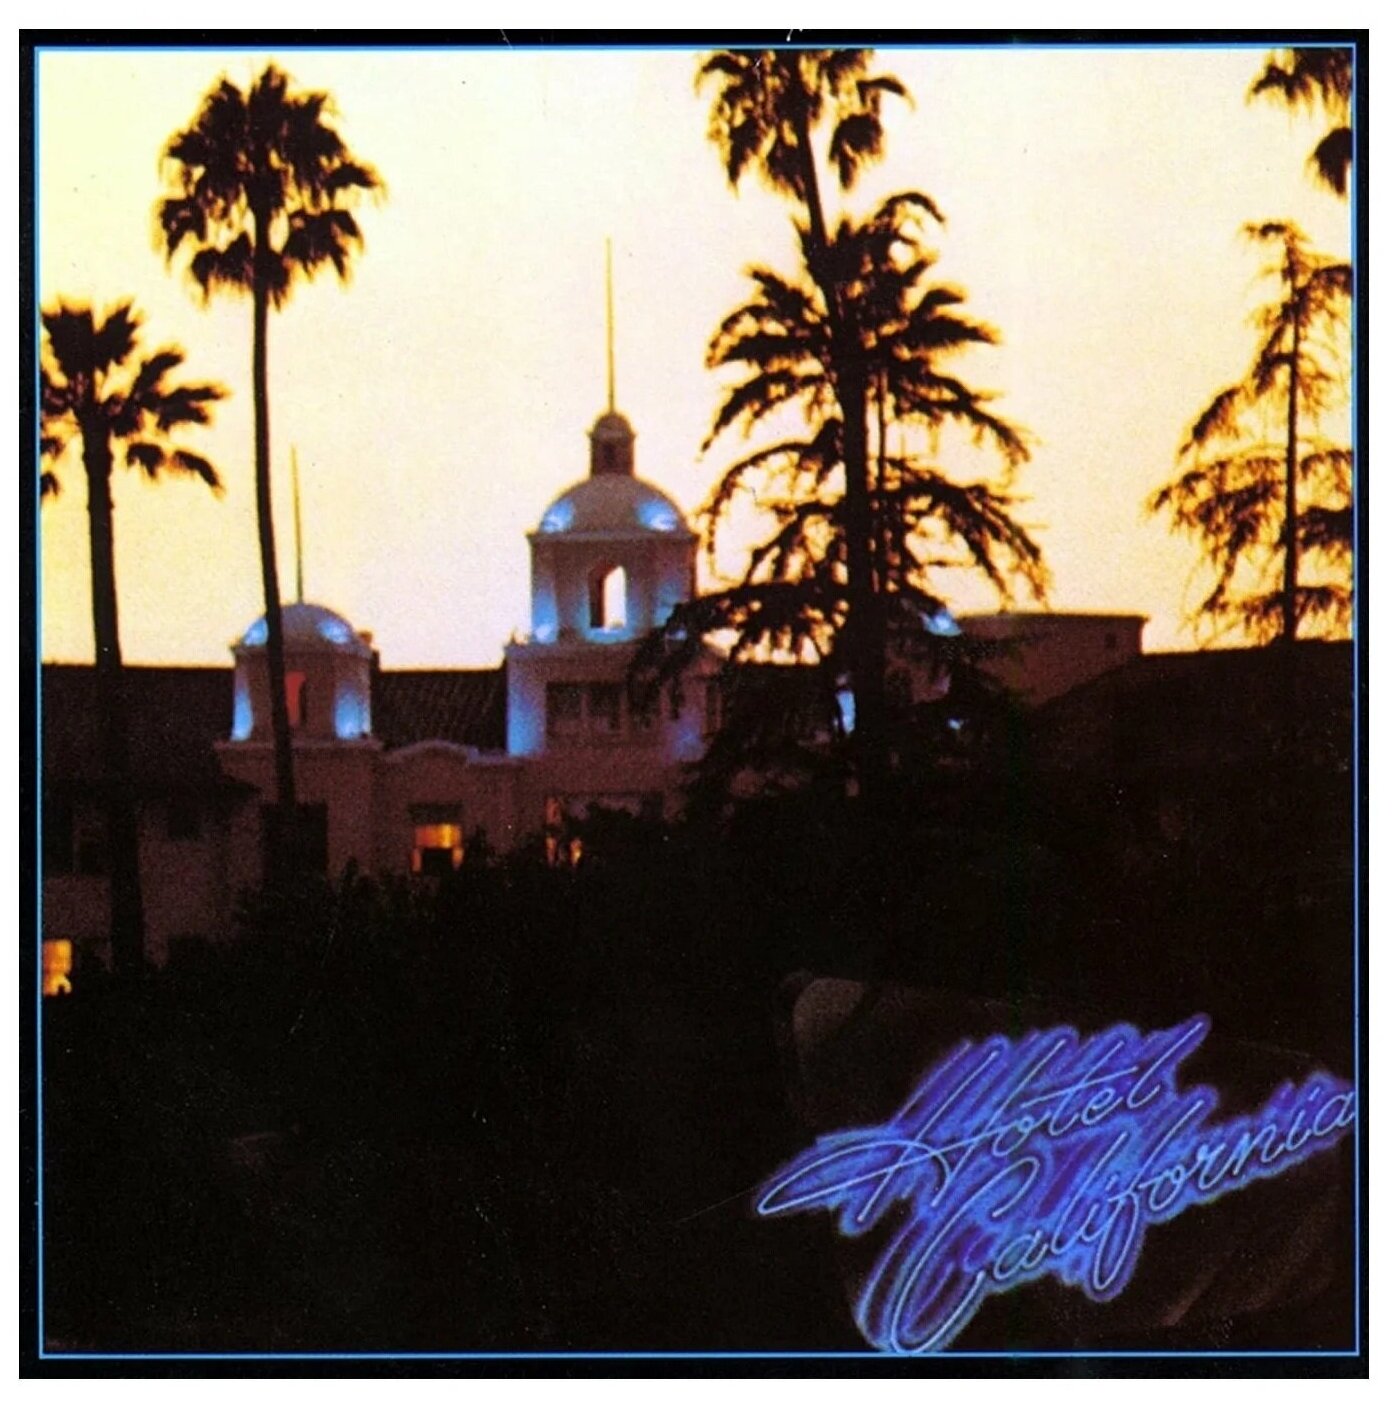 Eagles Hotel California Виниловая пластинка Warner Music - фото №1